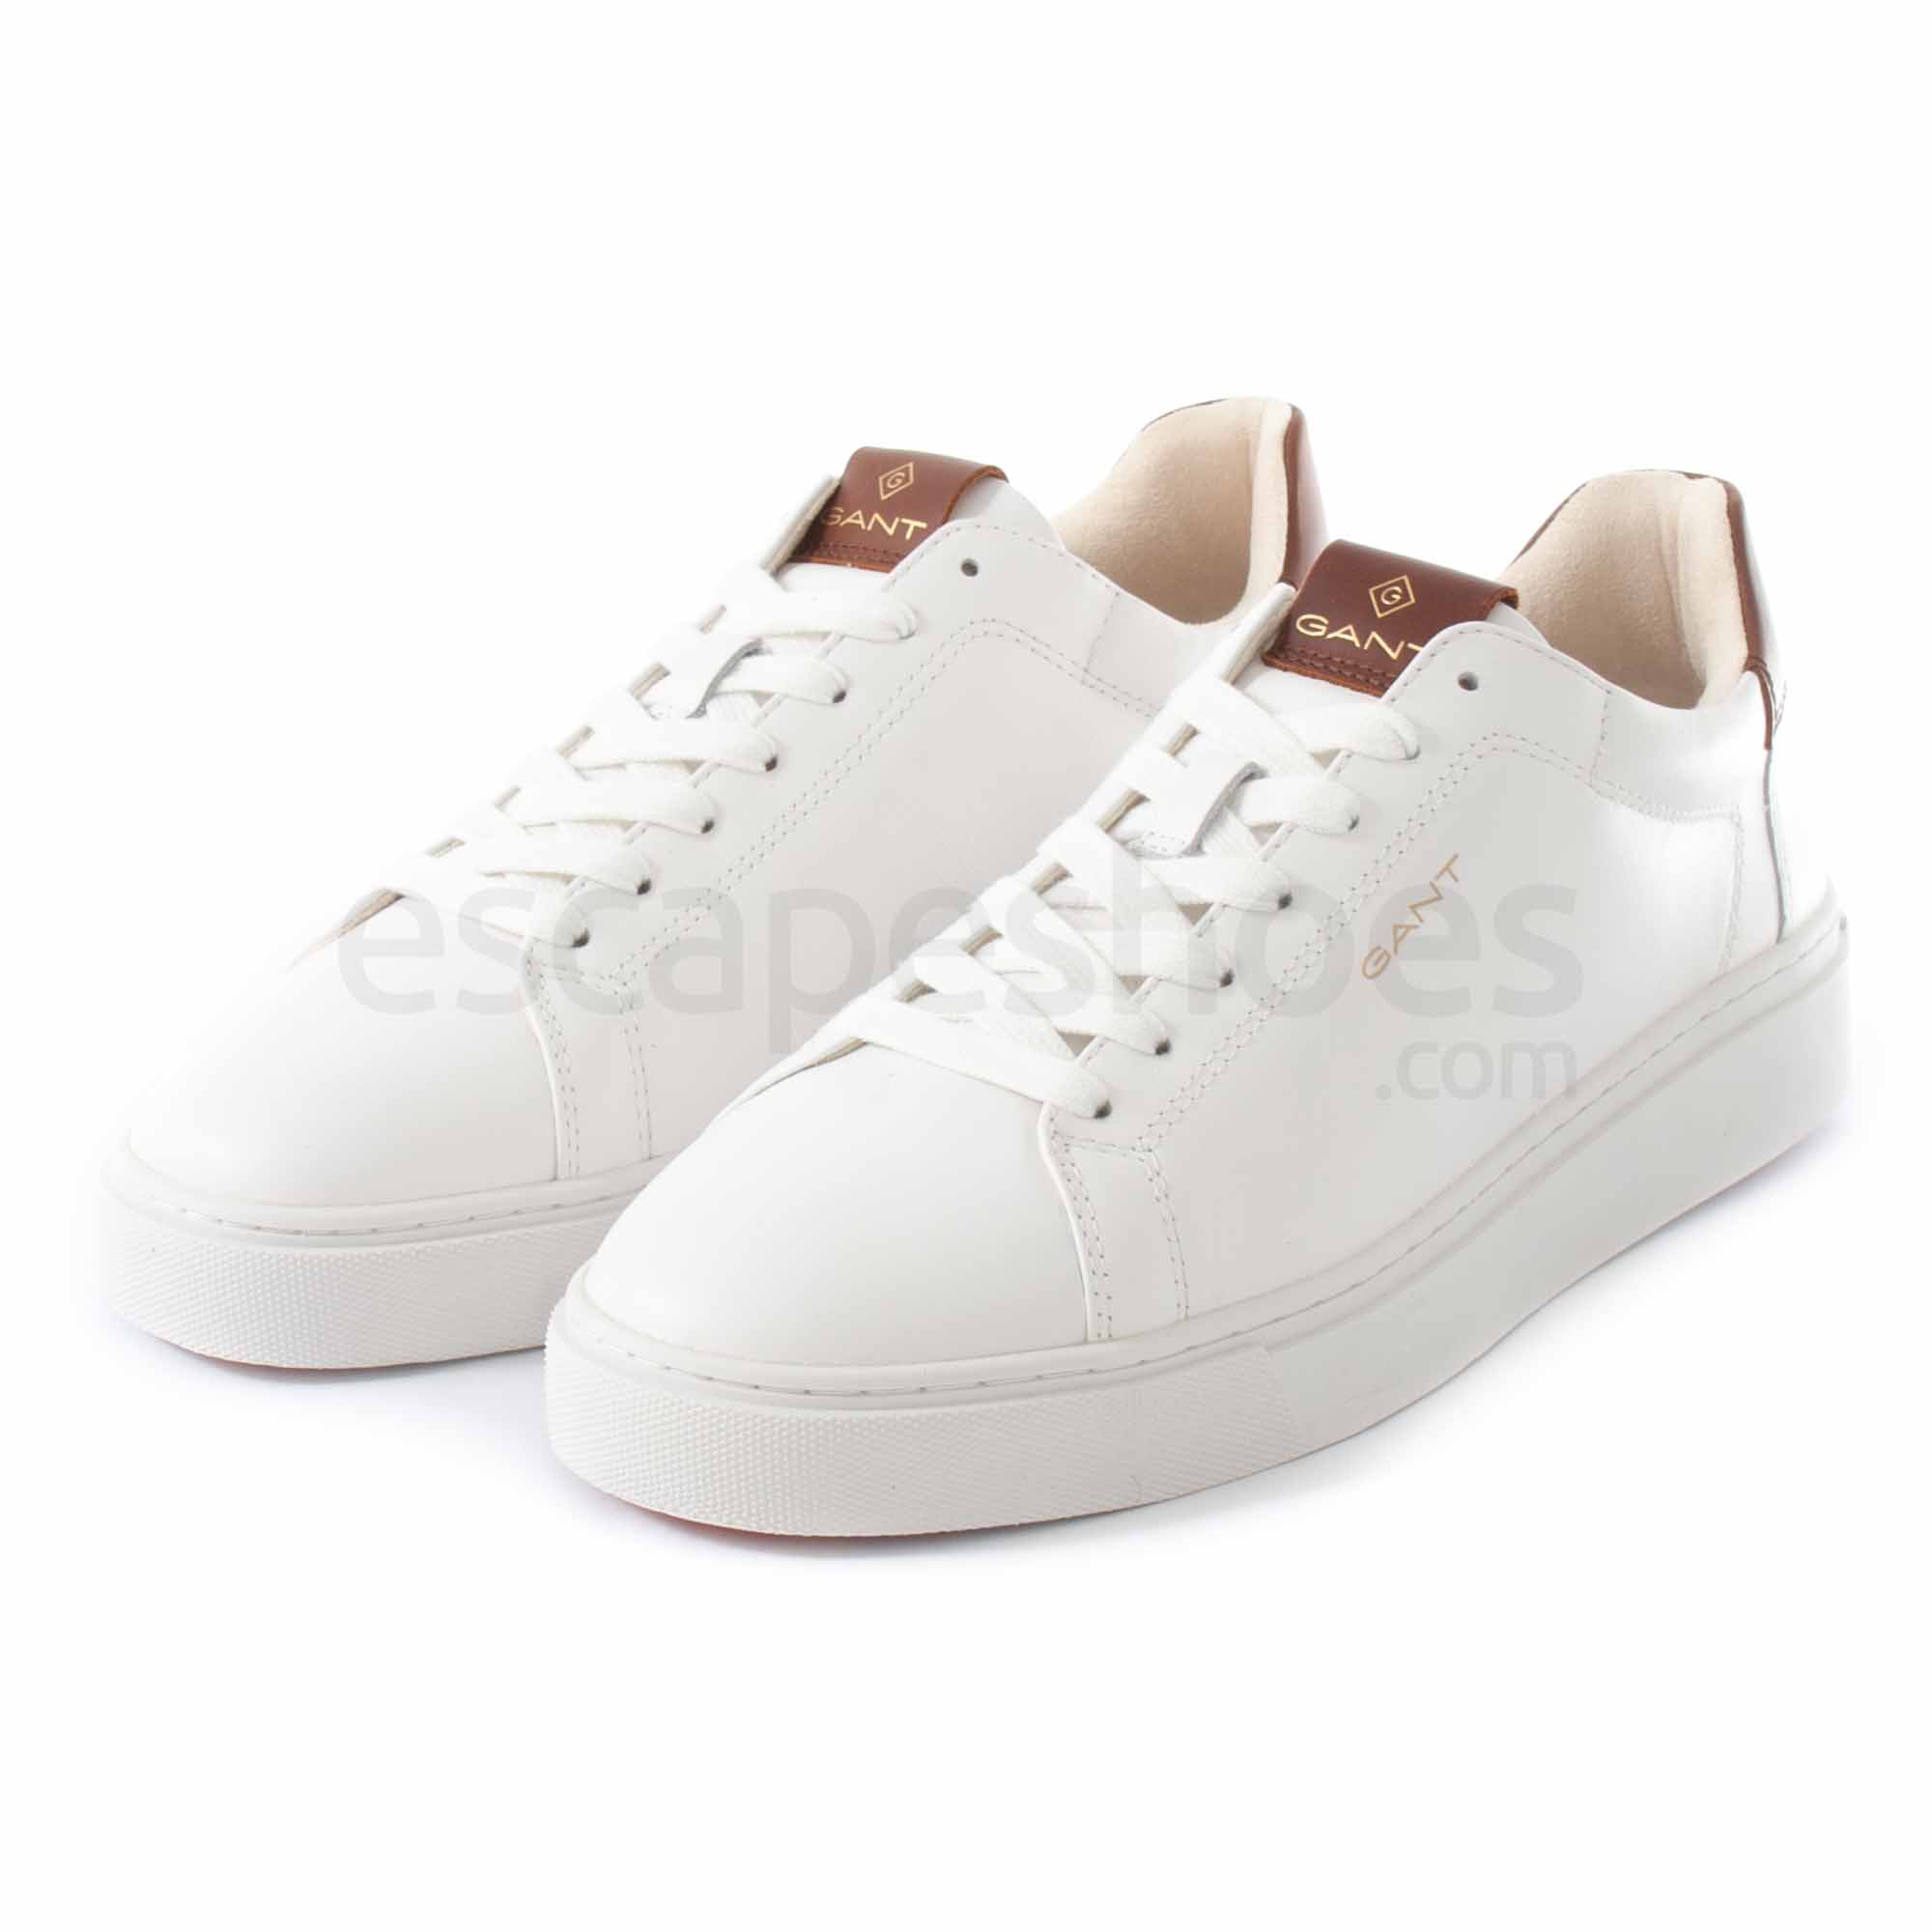 Zapatilla Gant modelo Mc Julien blanco. Comprar zapatillas blancas